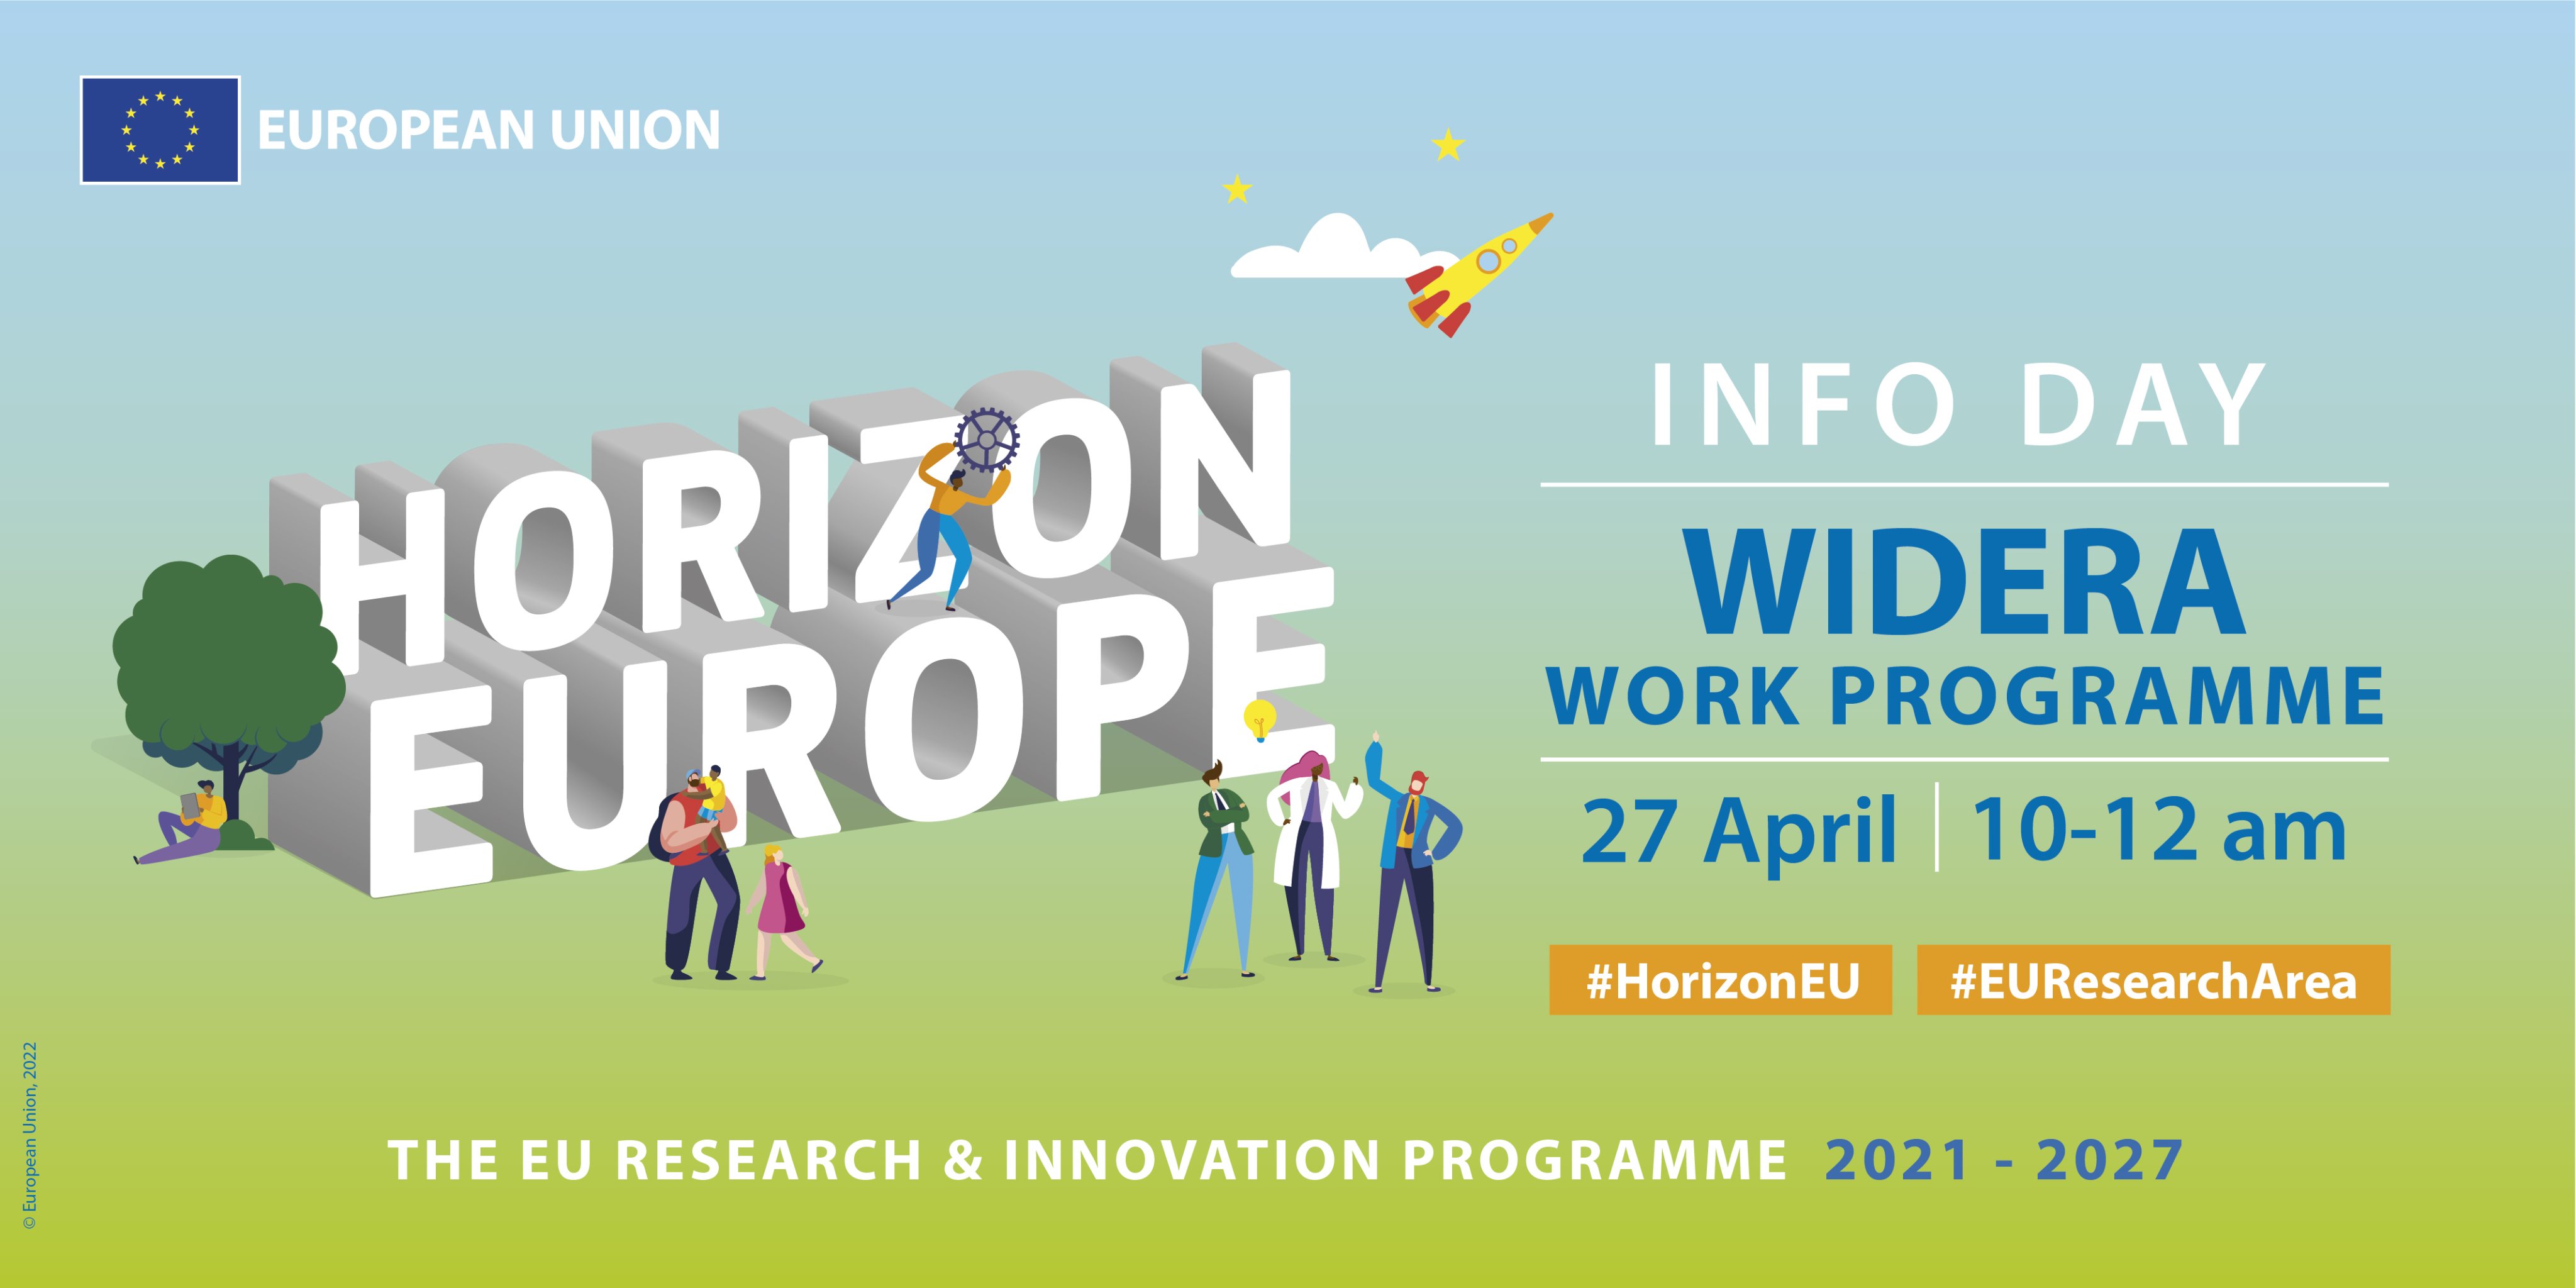 Info day on Horizon Europe's WIDERA programme